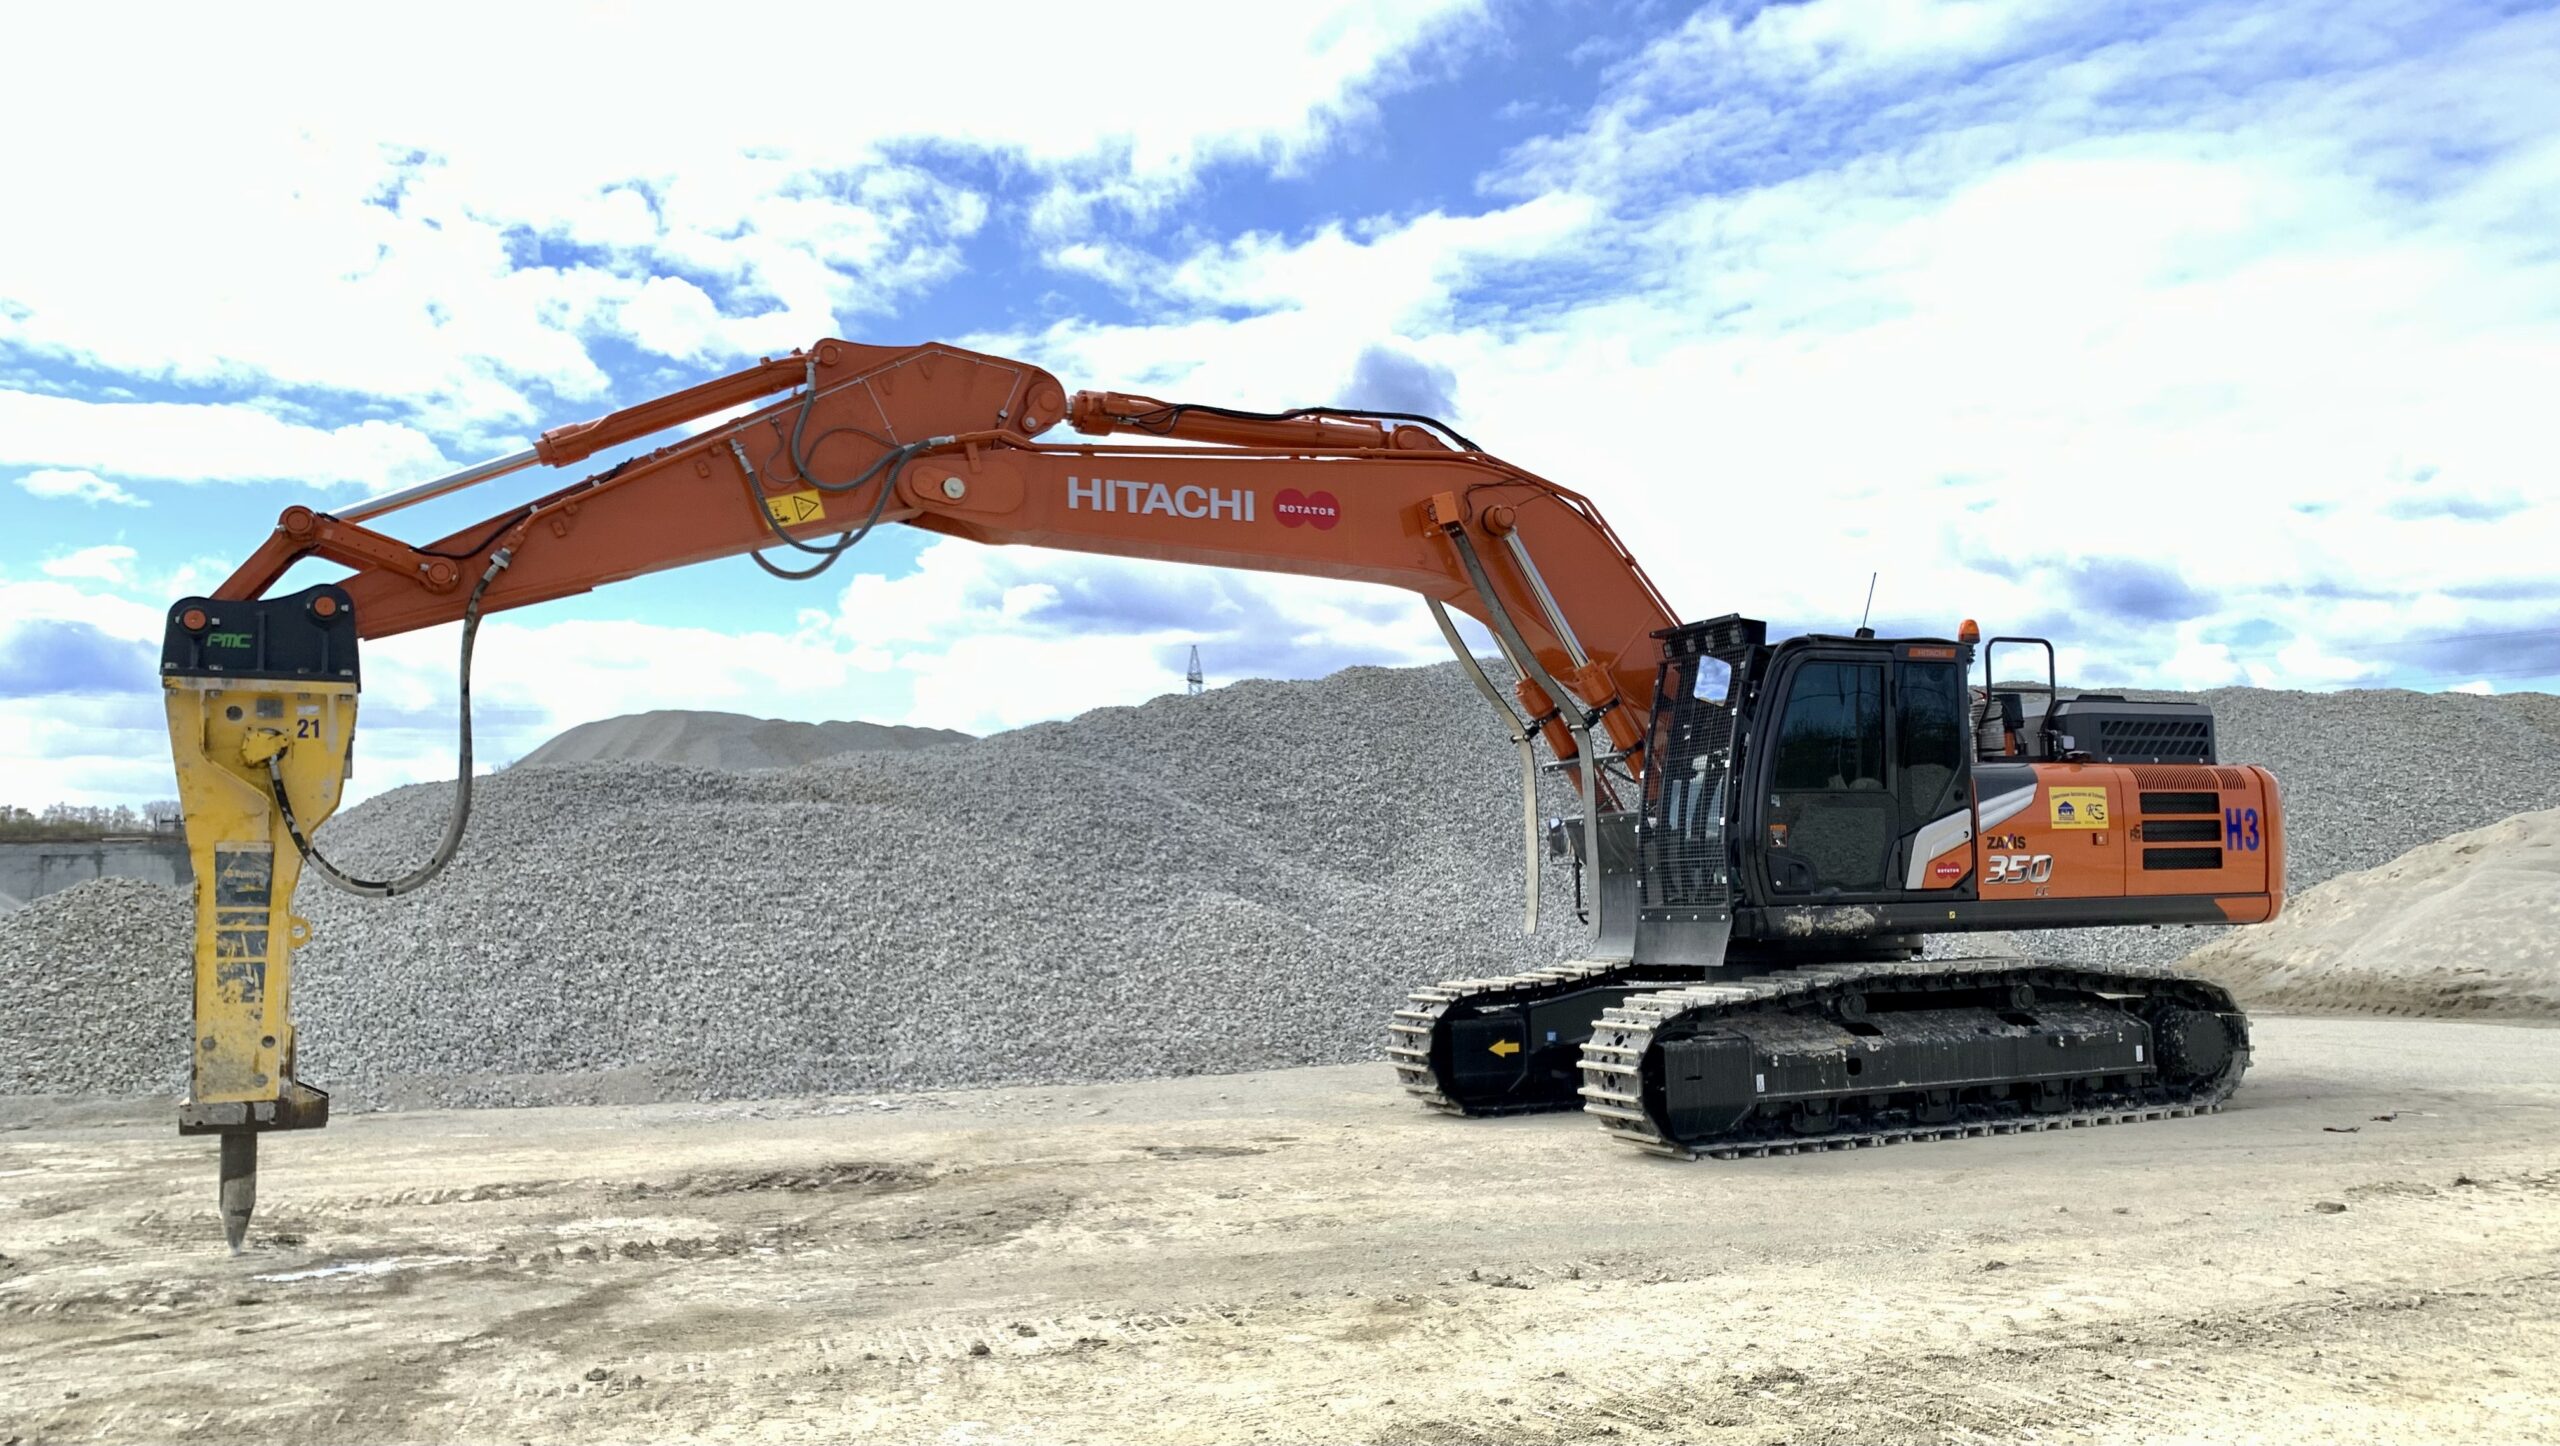 Limestone Factories of Estonia has bought one more Hitachi excavator